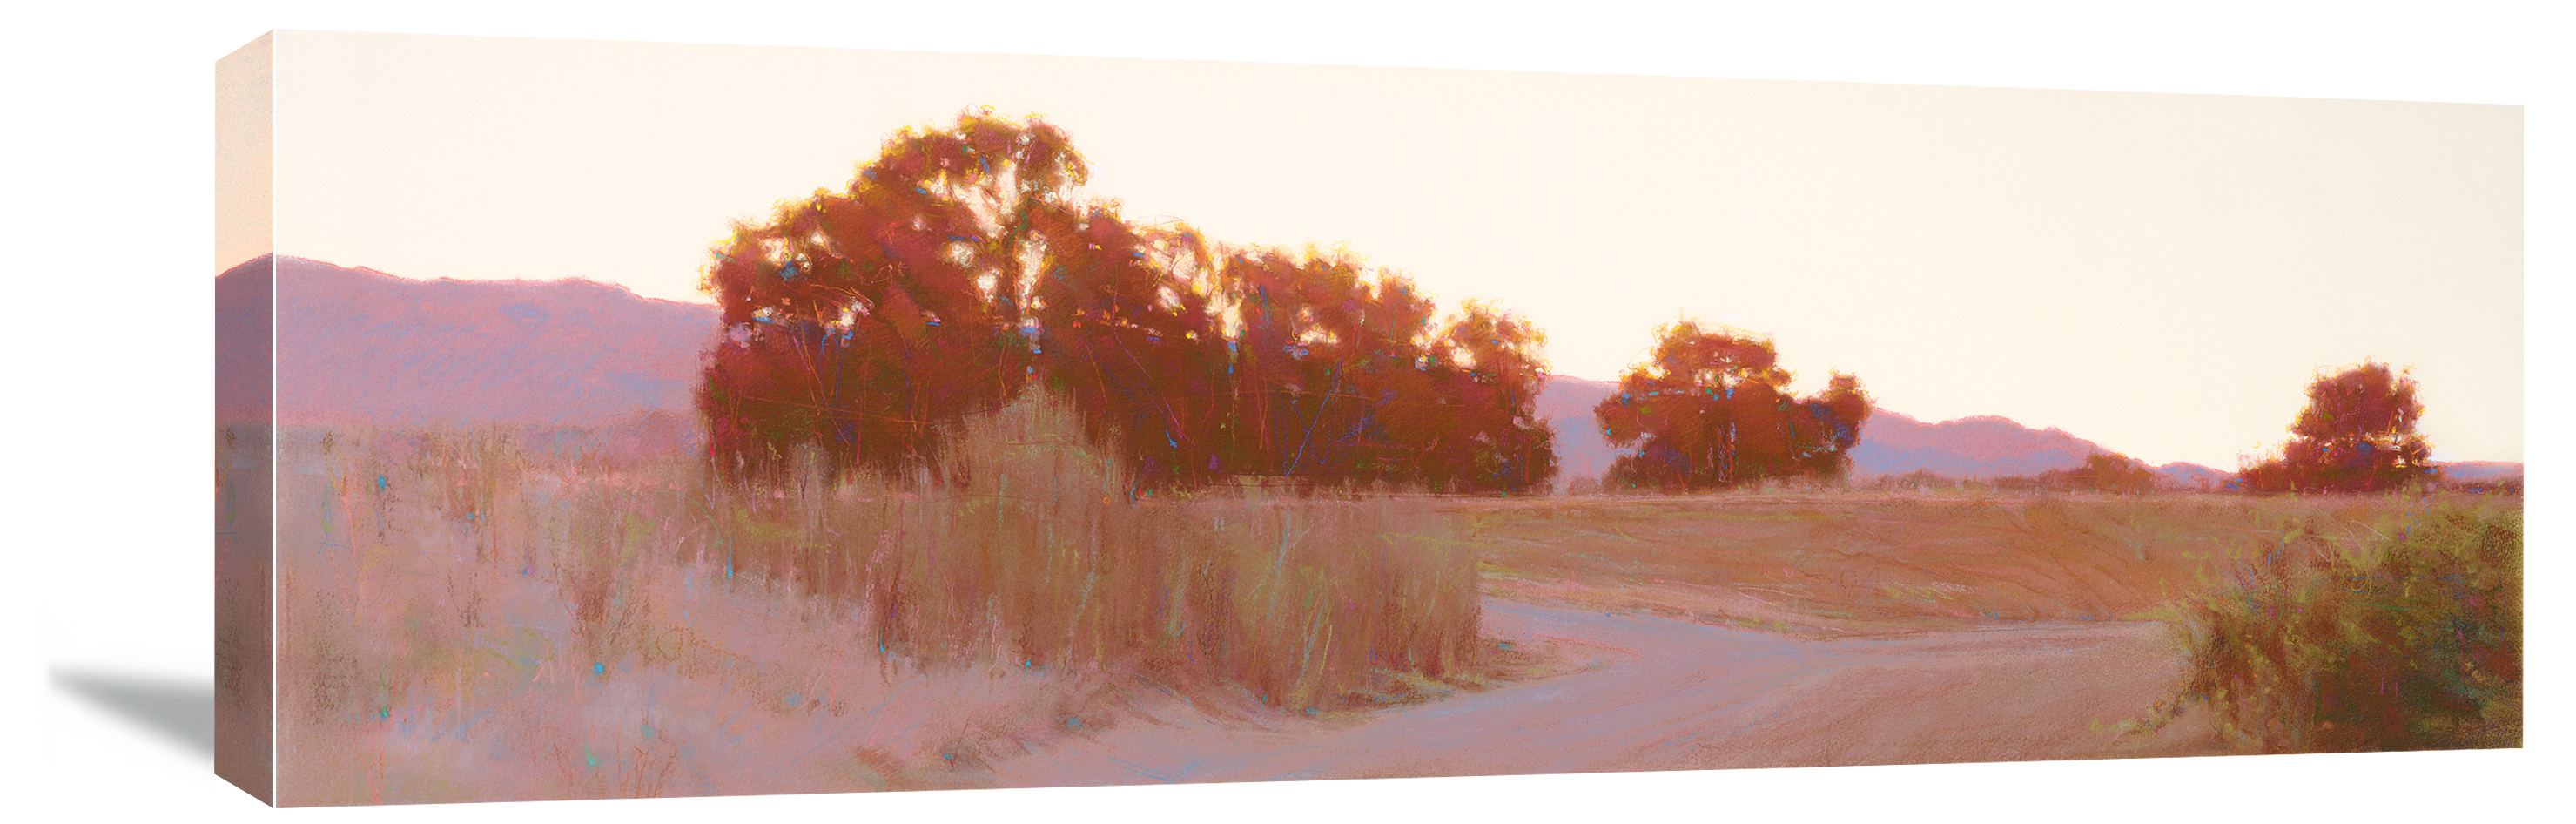 Steven Gordon; M Path, 2000, Original Giclee Reproduction, 40 x 13 inches. Artwork description: 241  Napa Valley Sunset ...